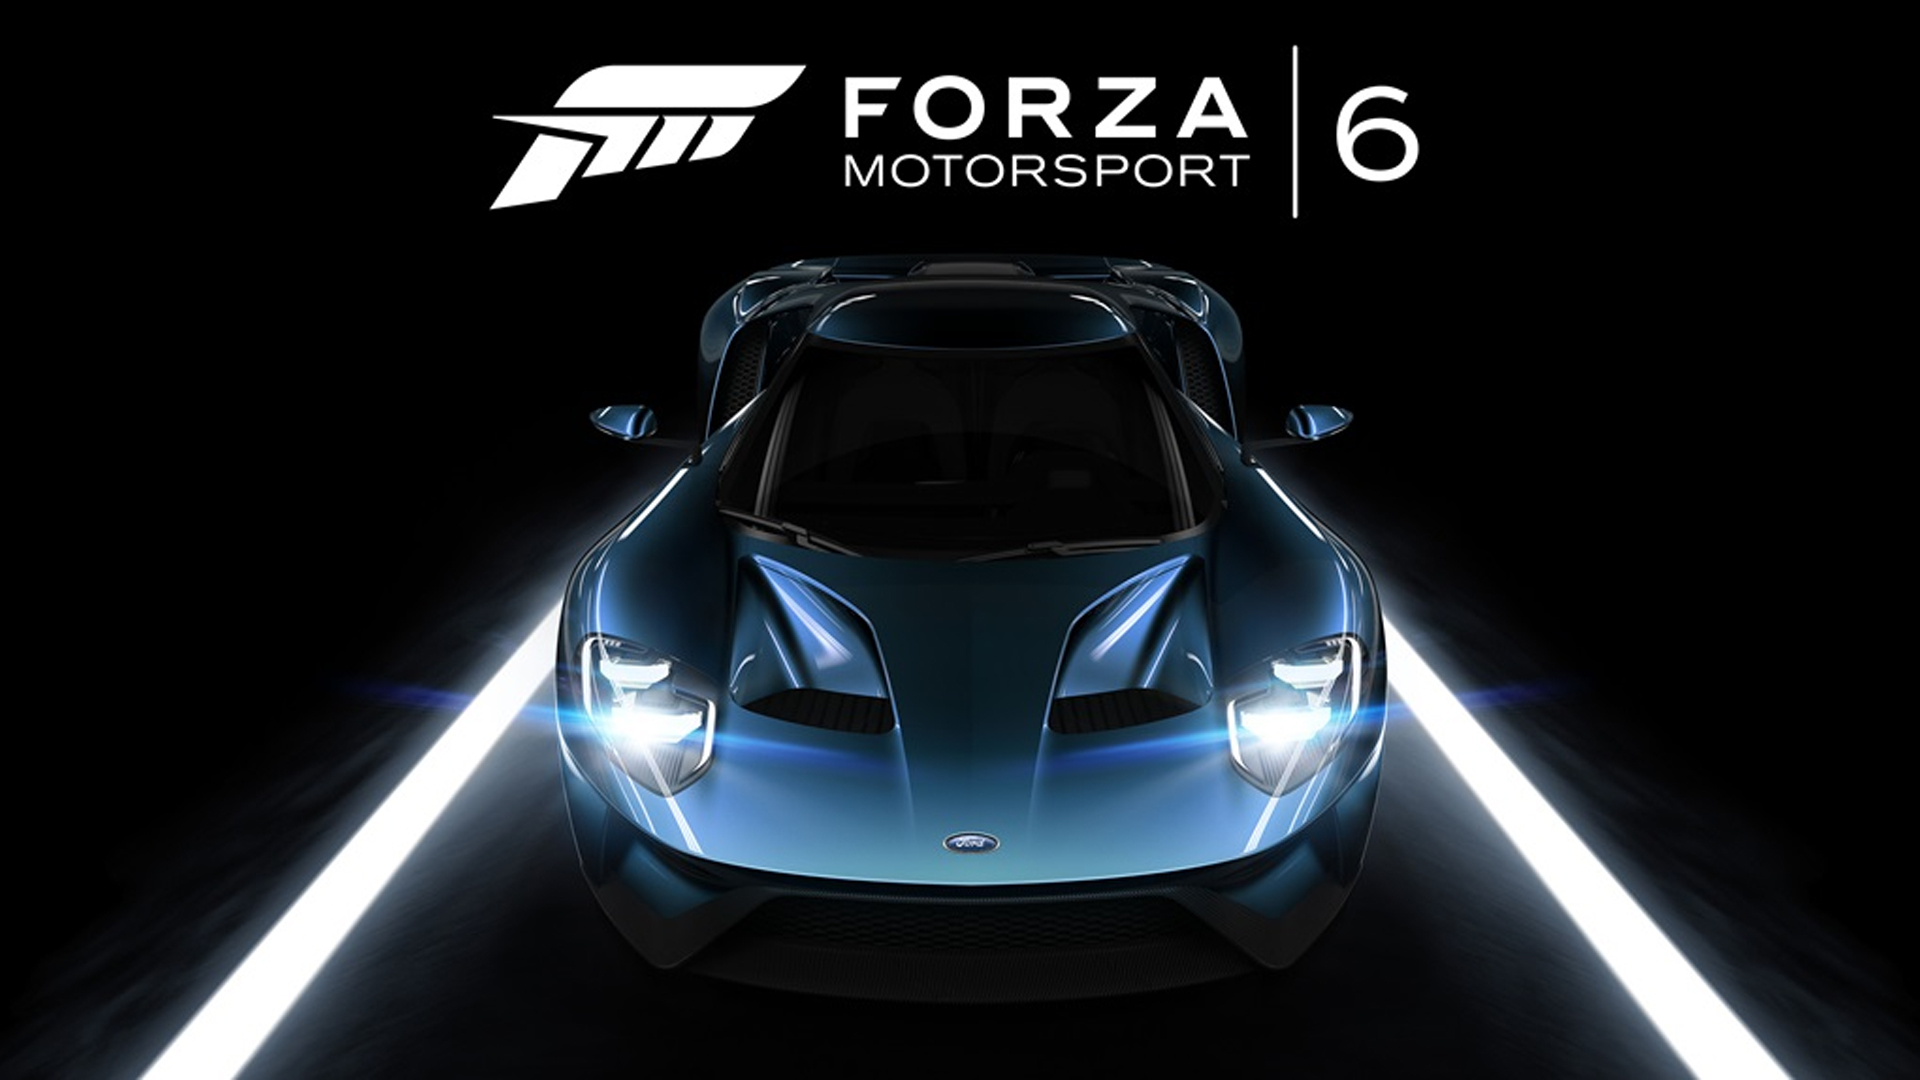 Forza Motorsport 6 Install Size